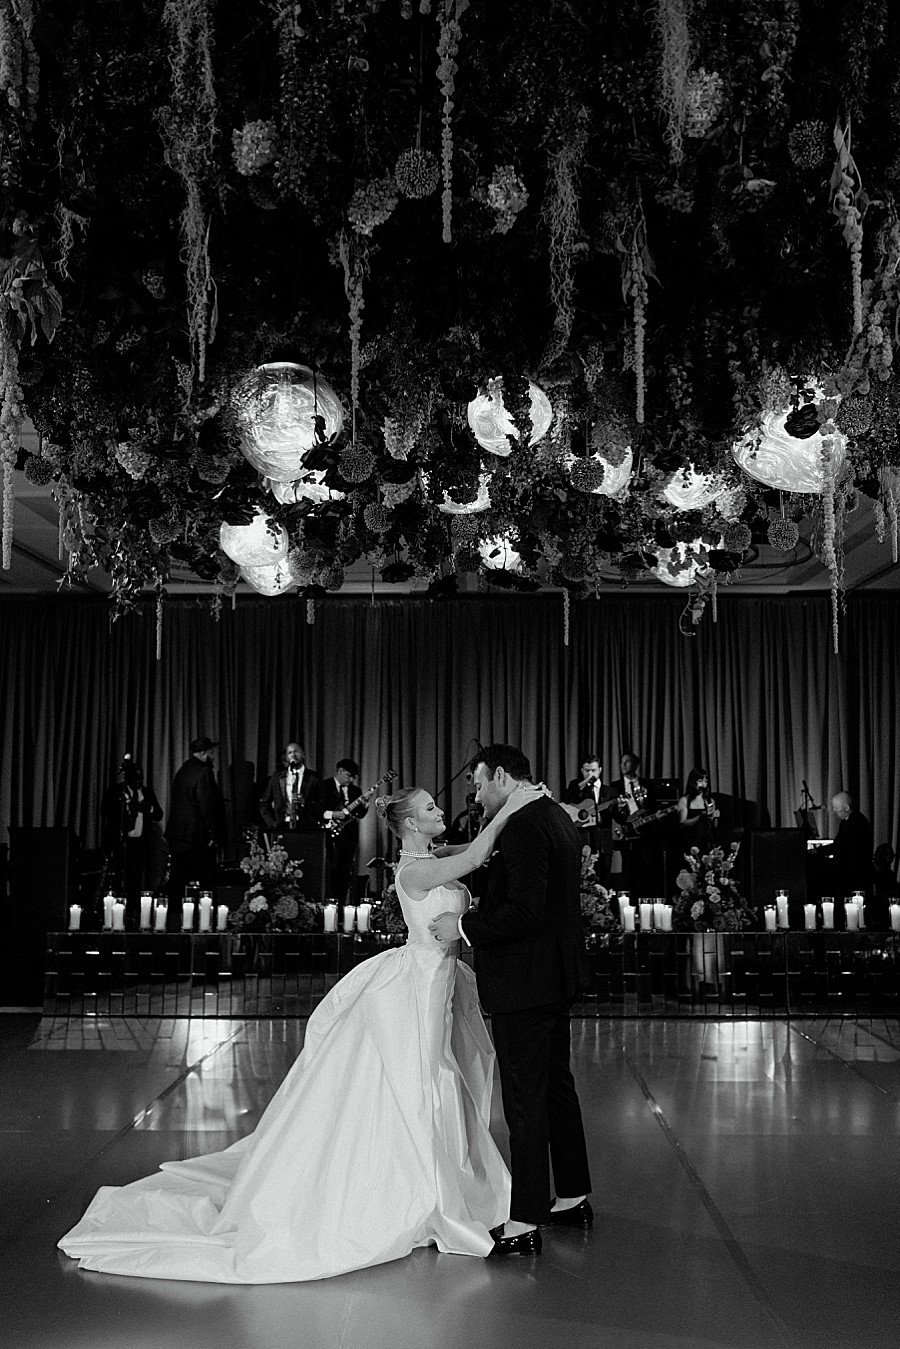 Four Seasons Hotel Chicago wedding venue, floral installation four seasons hotel, hanging floral installation wedding, Chicago wedding venues, Chicago wedding photographer